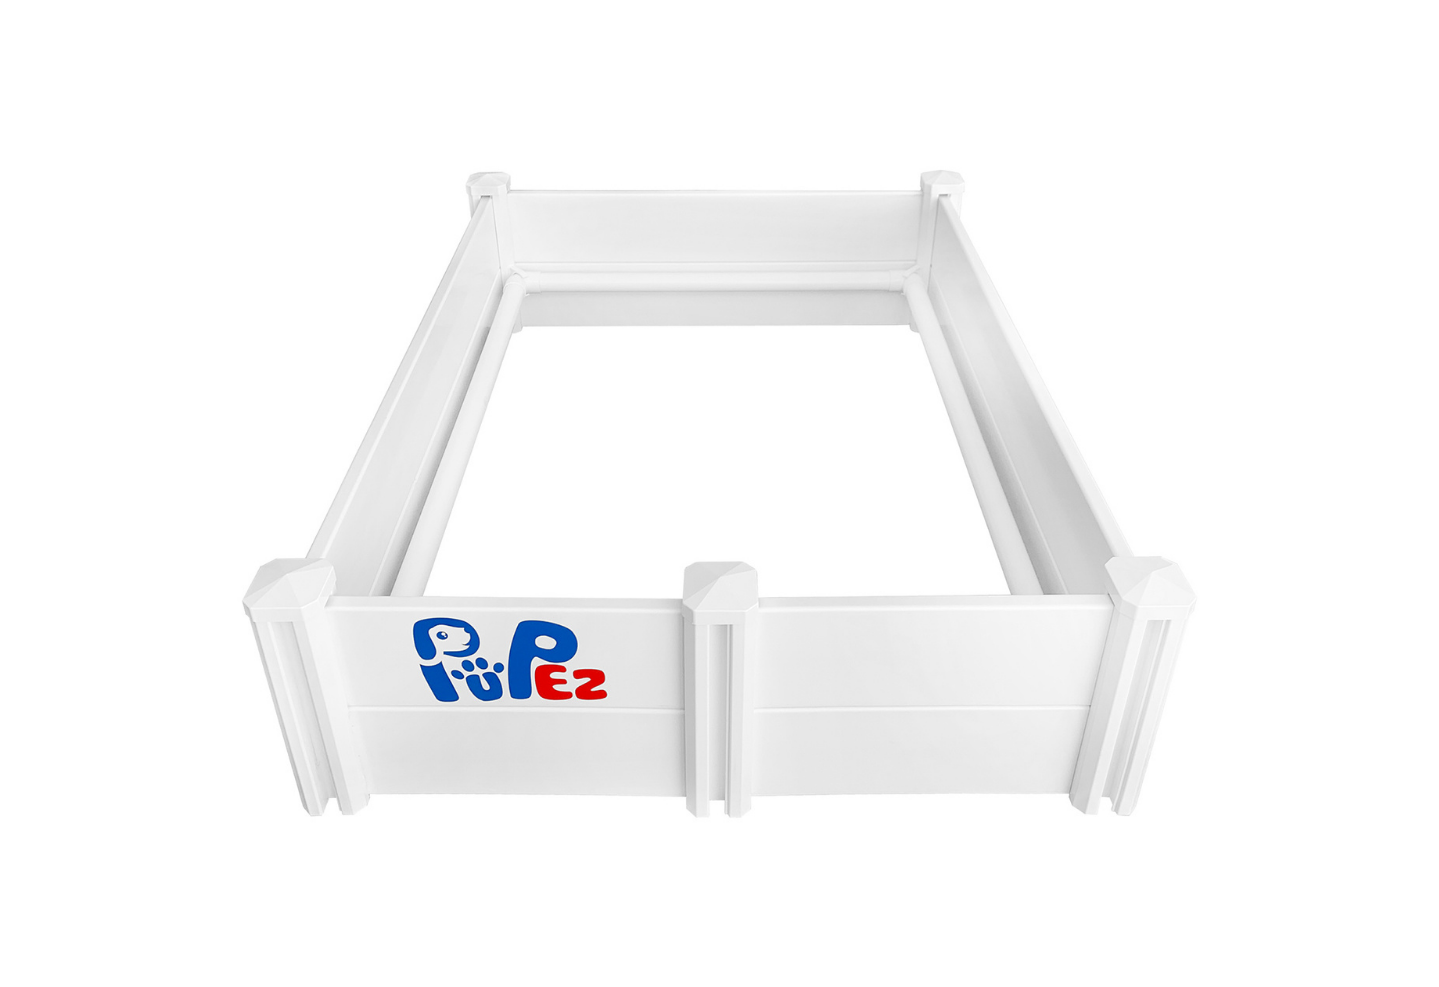 Small Whelping Box For Small & Medium Dogs - pupez.com